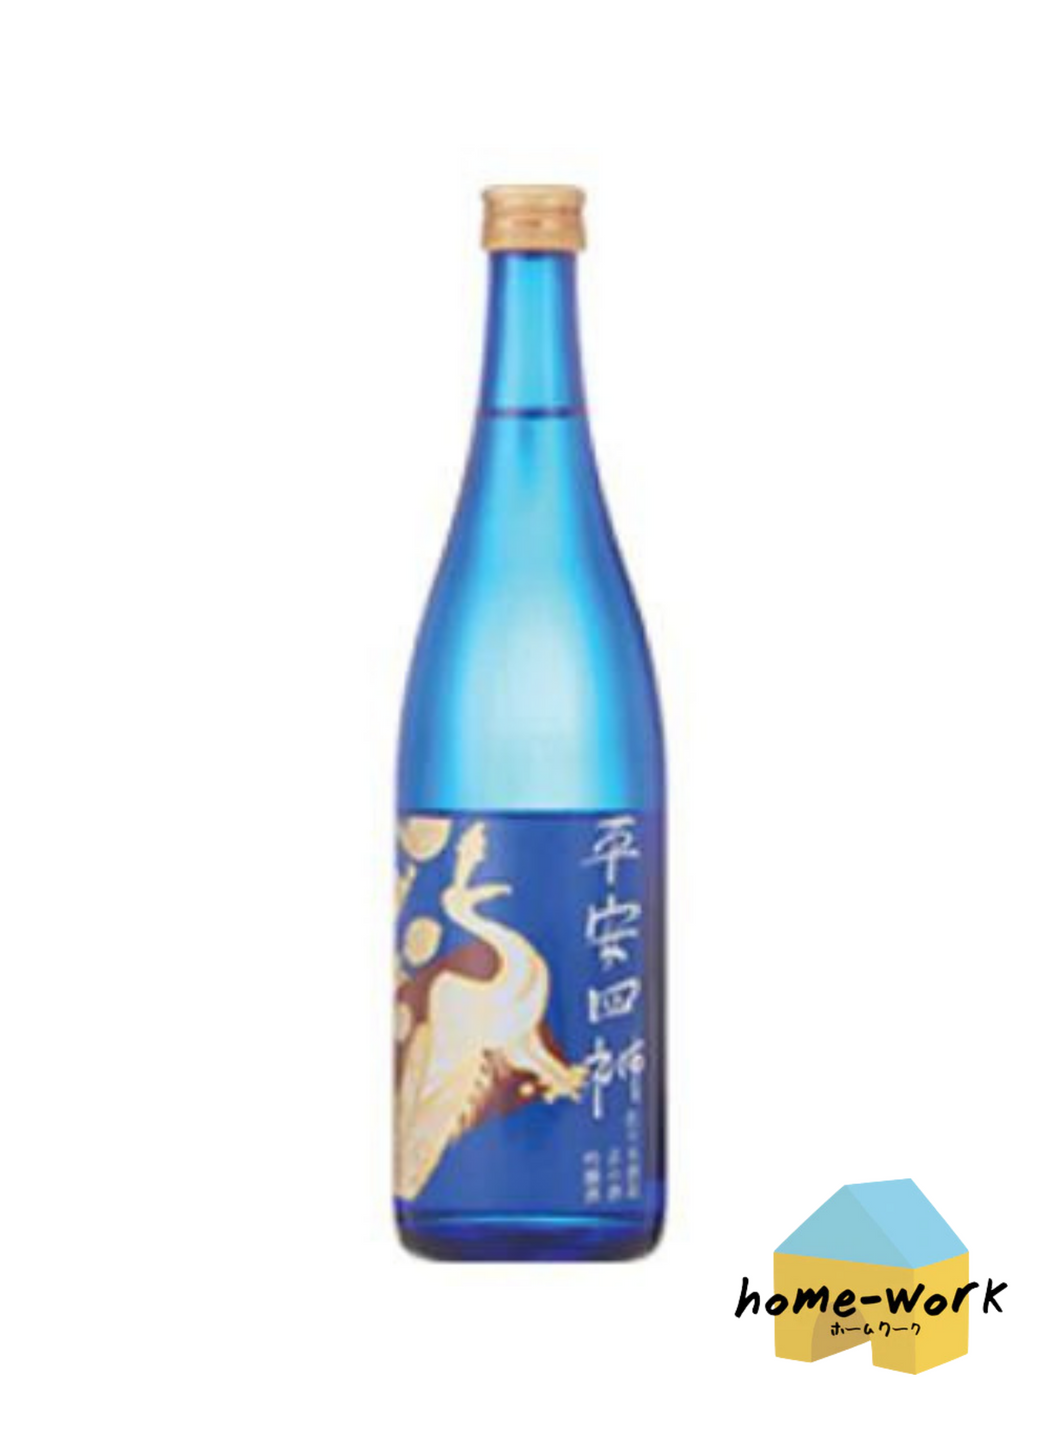 Home-work: Heian Shijin Blue Ginjo, 15% (720ml)